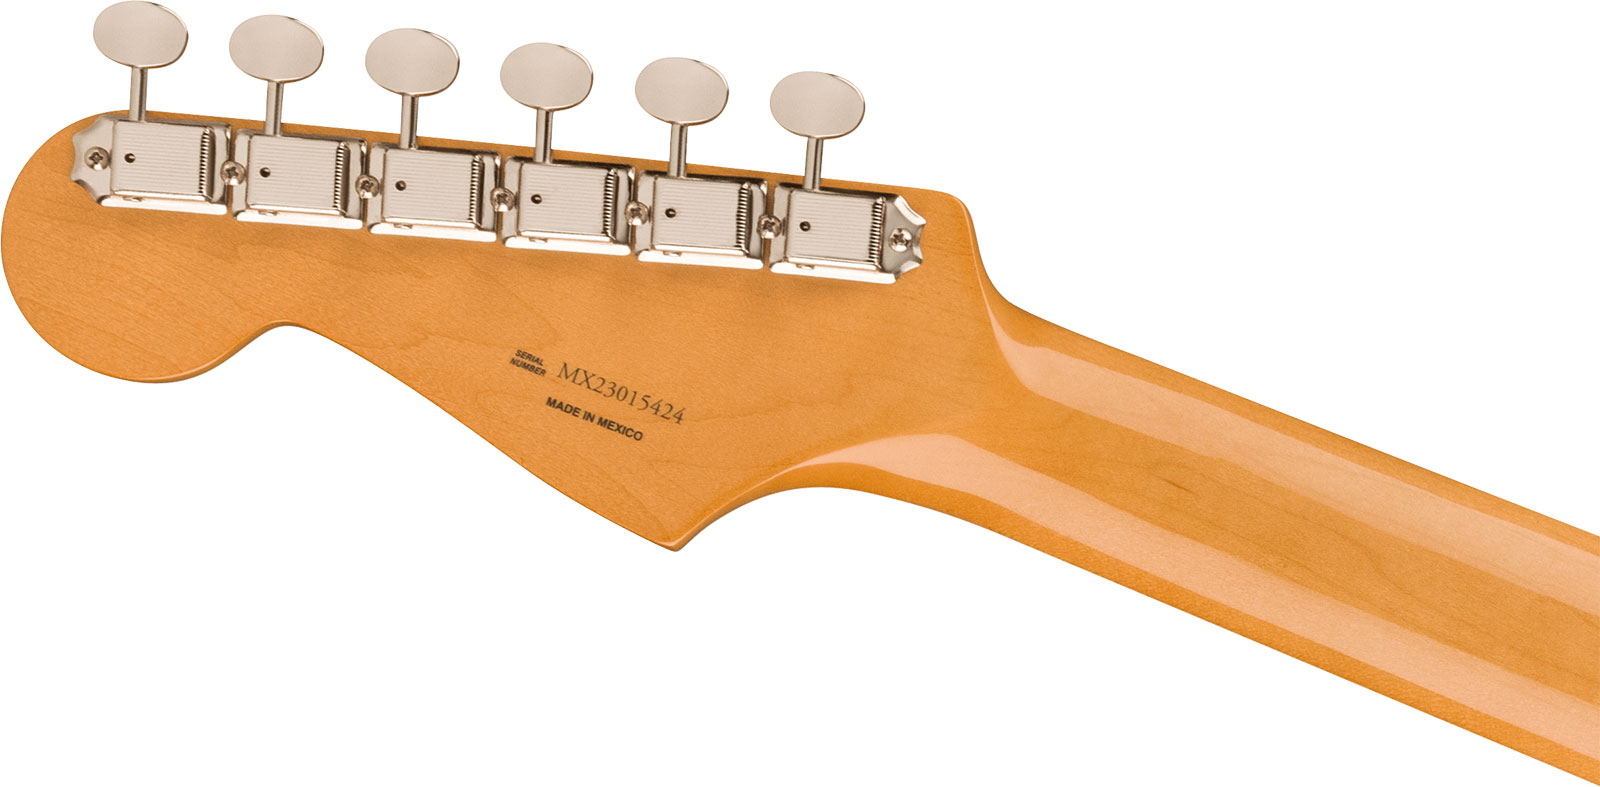 Fender Strat 60s Vintera 2 Mex 3s Trem Rw - Olympic White - Guitarra eléctrica con forma de str. - Variation 3